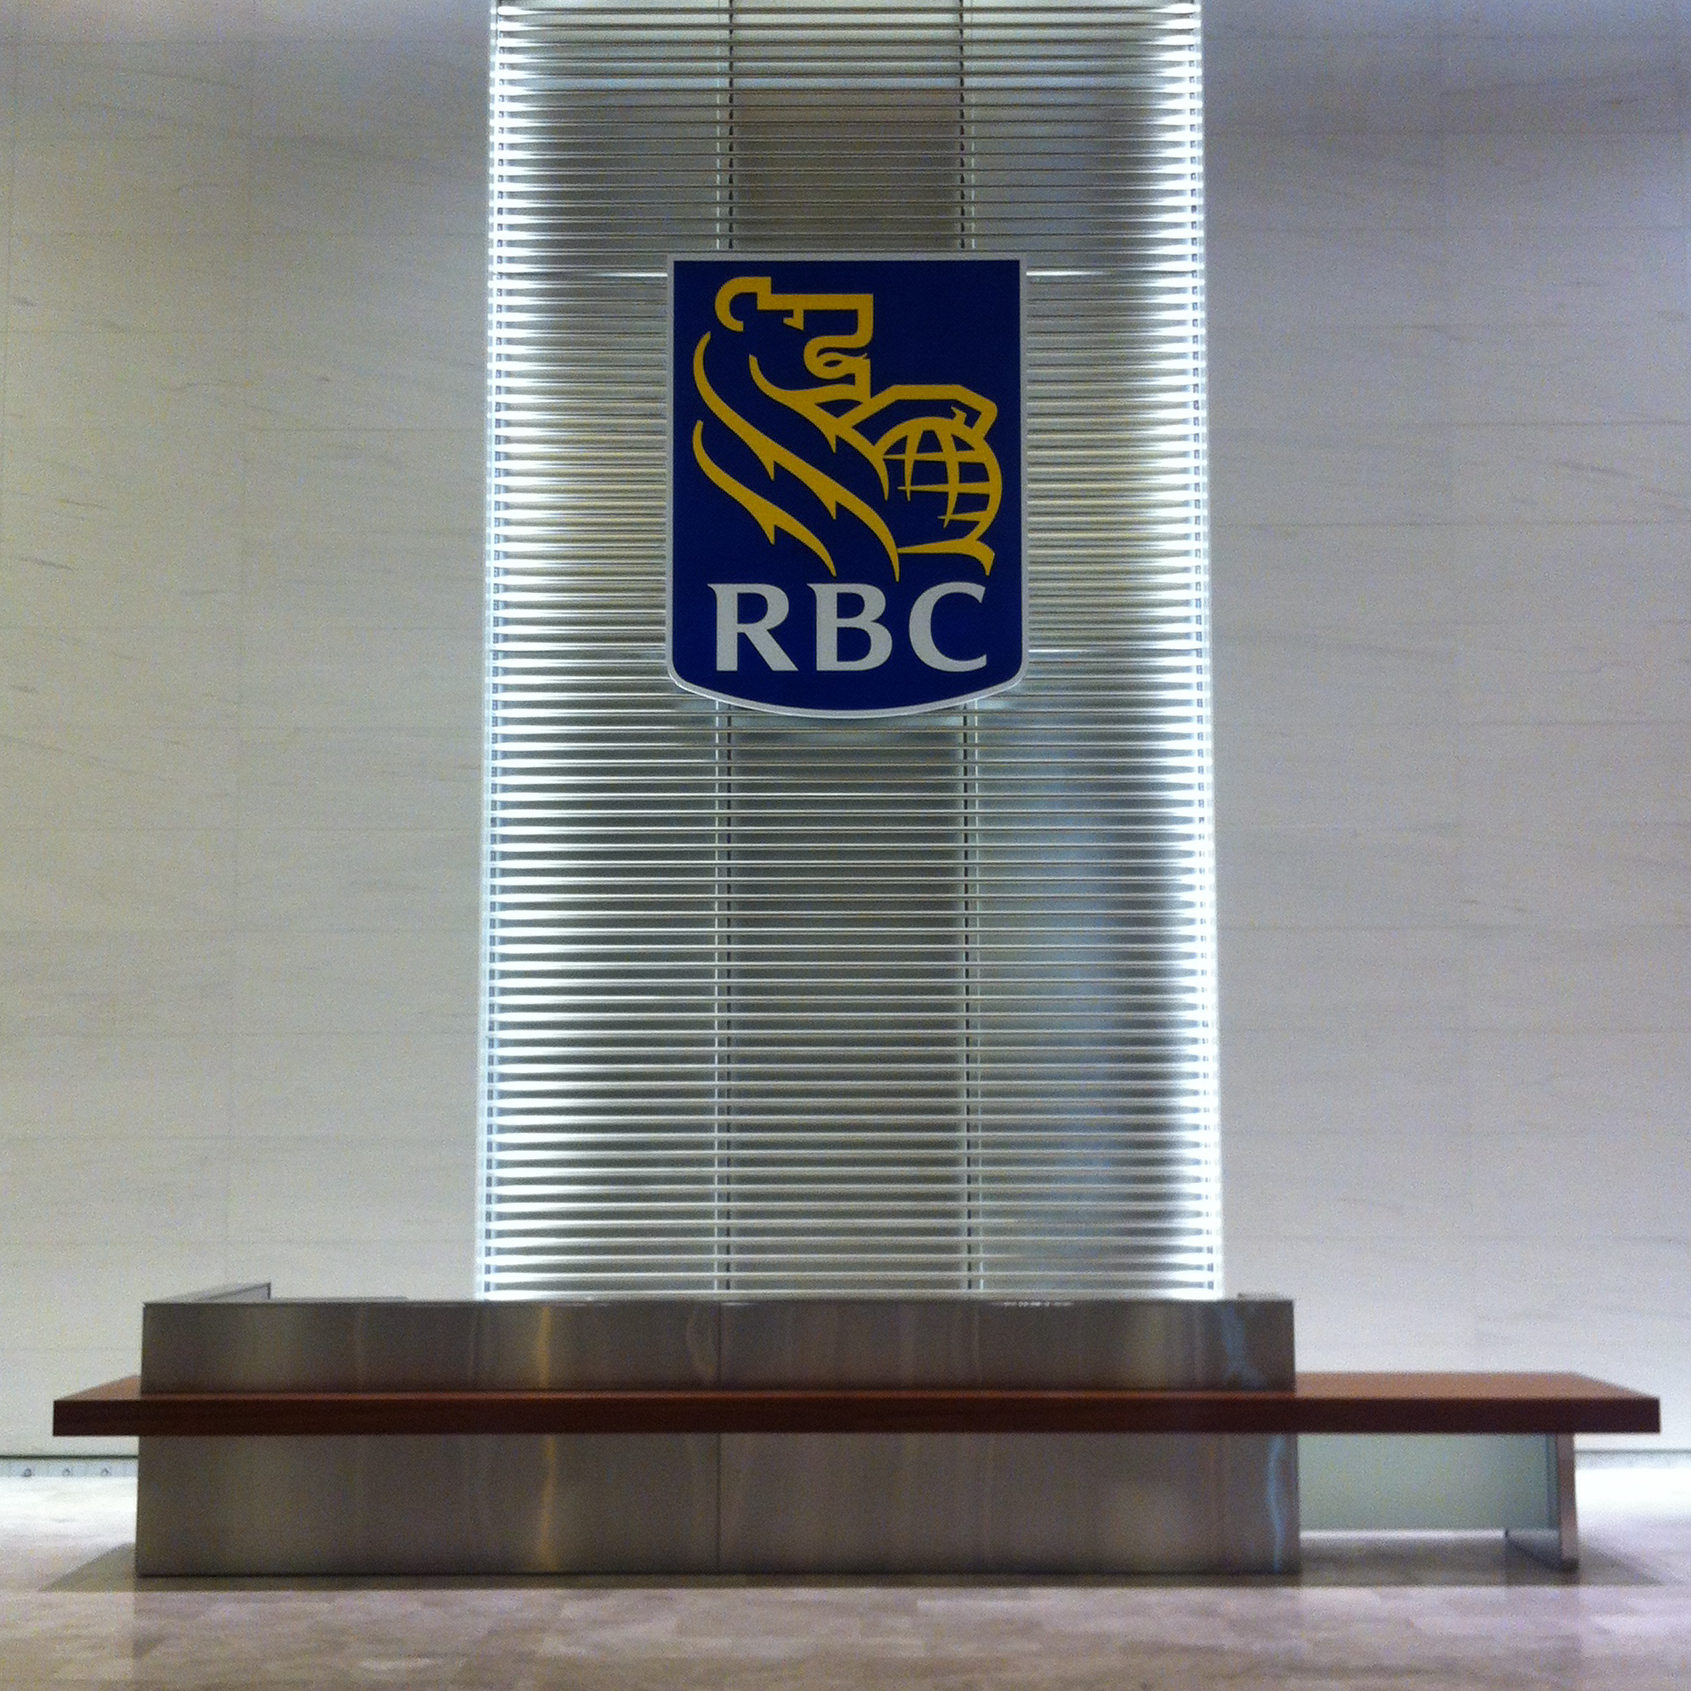 Royal Bank of Canada – Office Properties